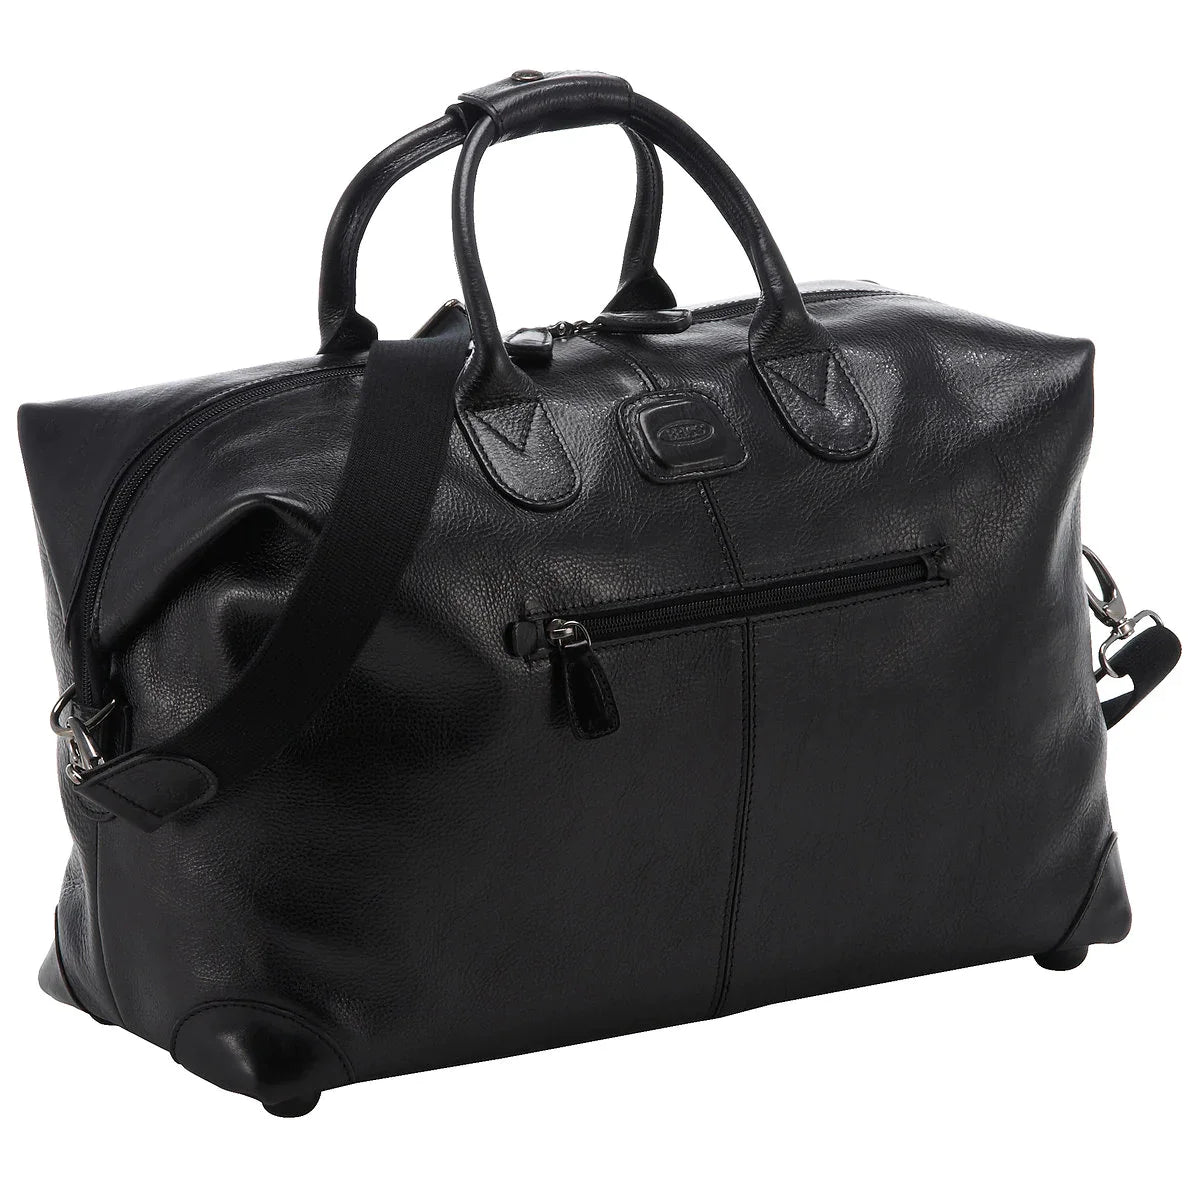 Brics Life Pelle leather travel bag 46 cm - black